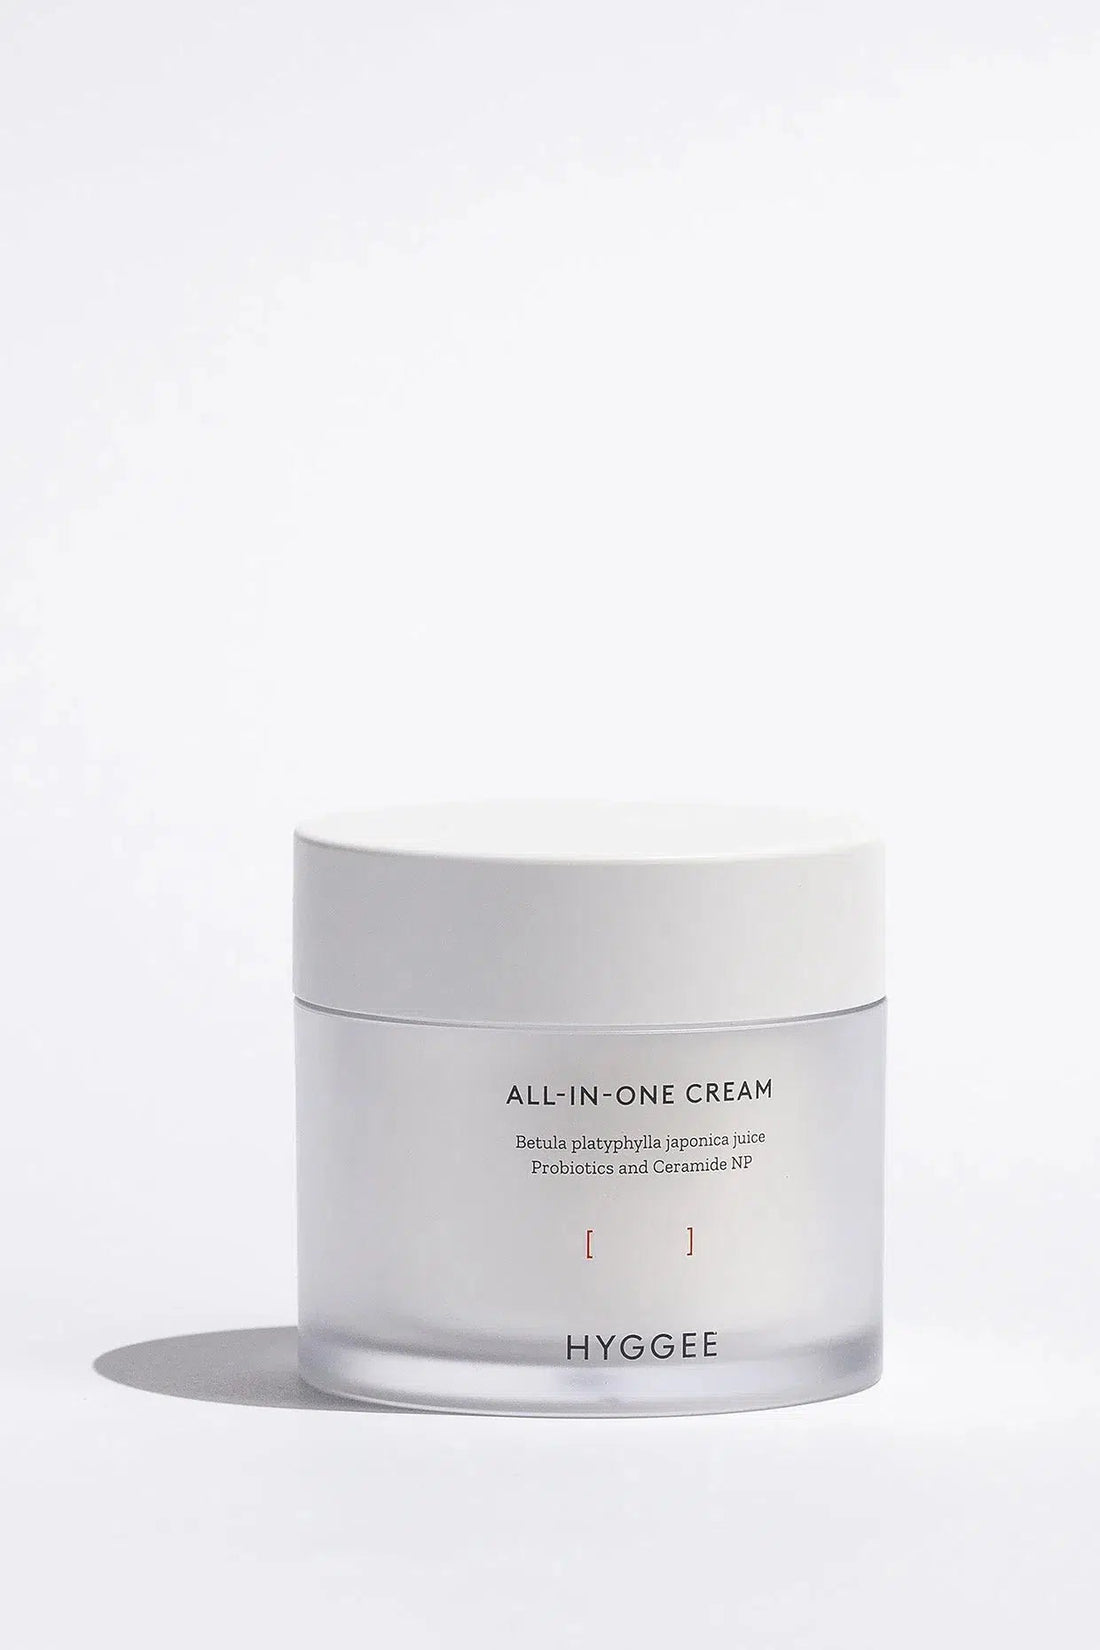 HYGGEE All- In-One Care Cream